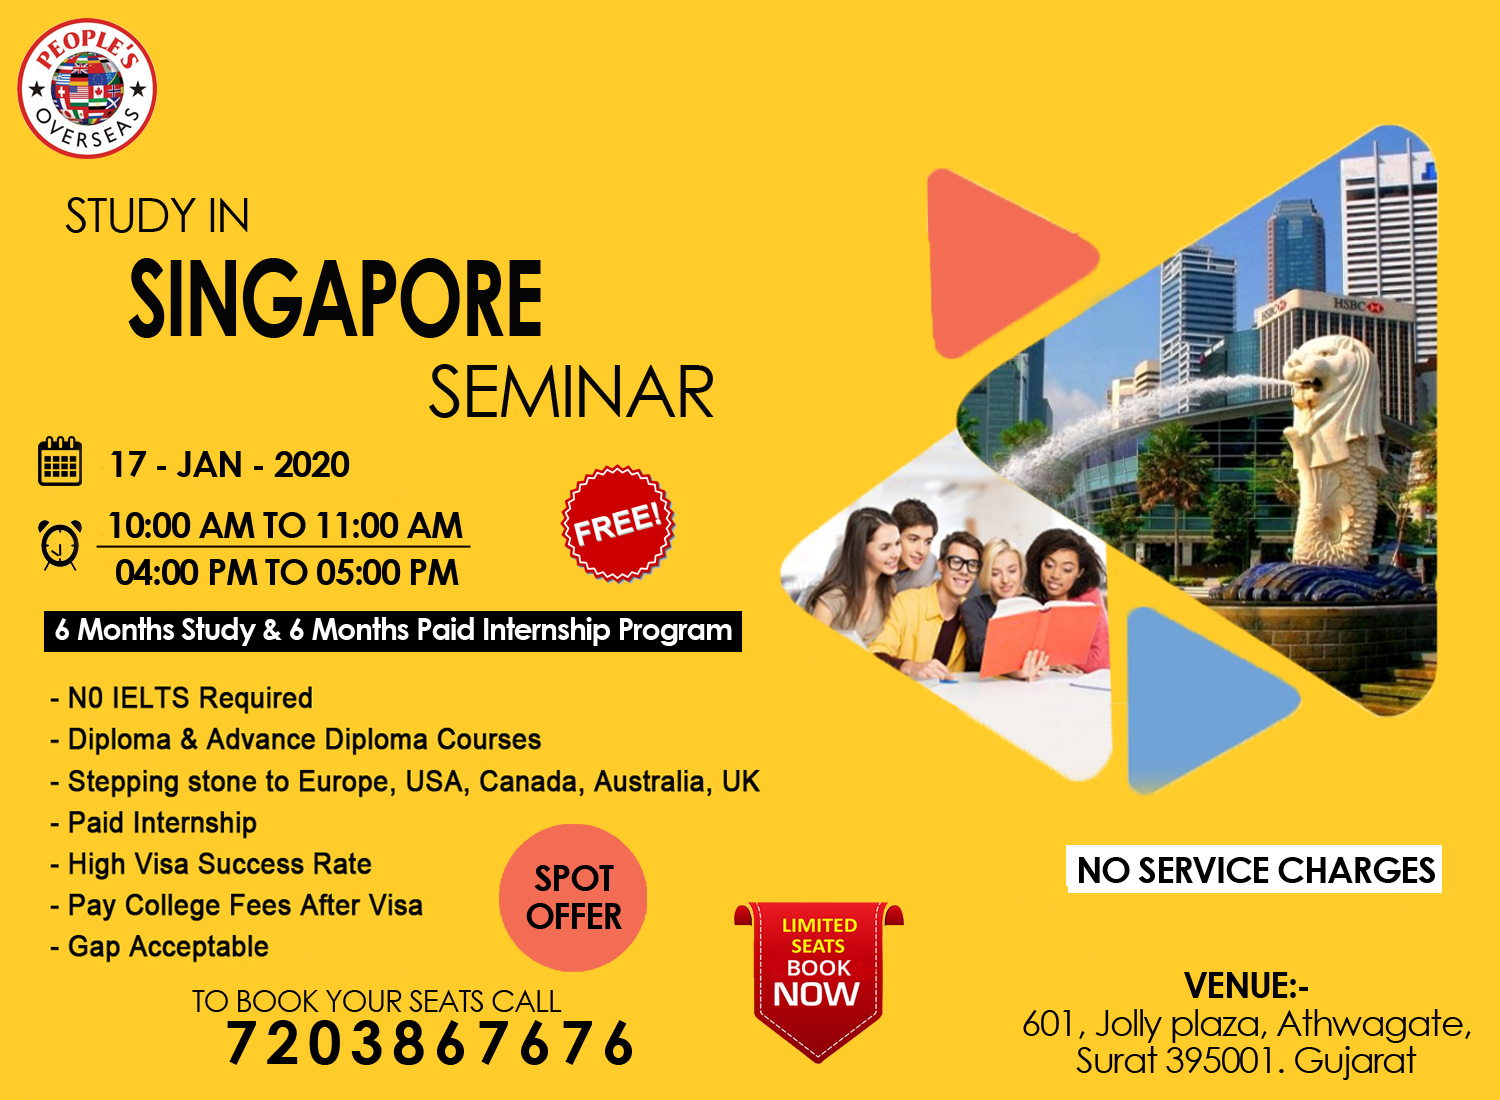 Seminar on Study in Singapore, Surat, Gujarat, India